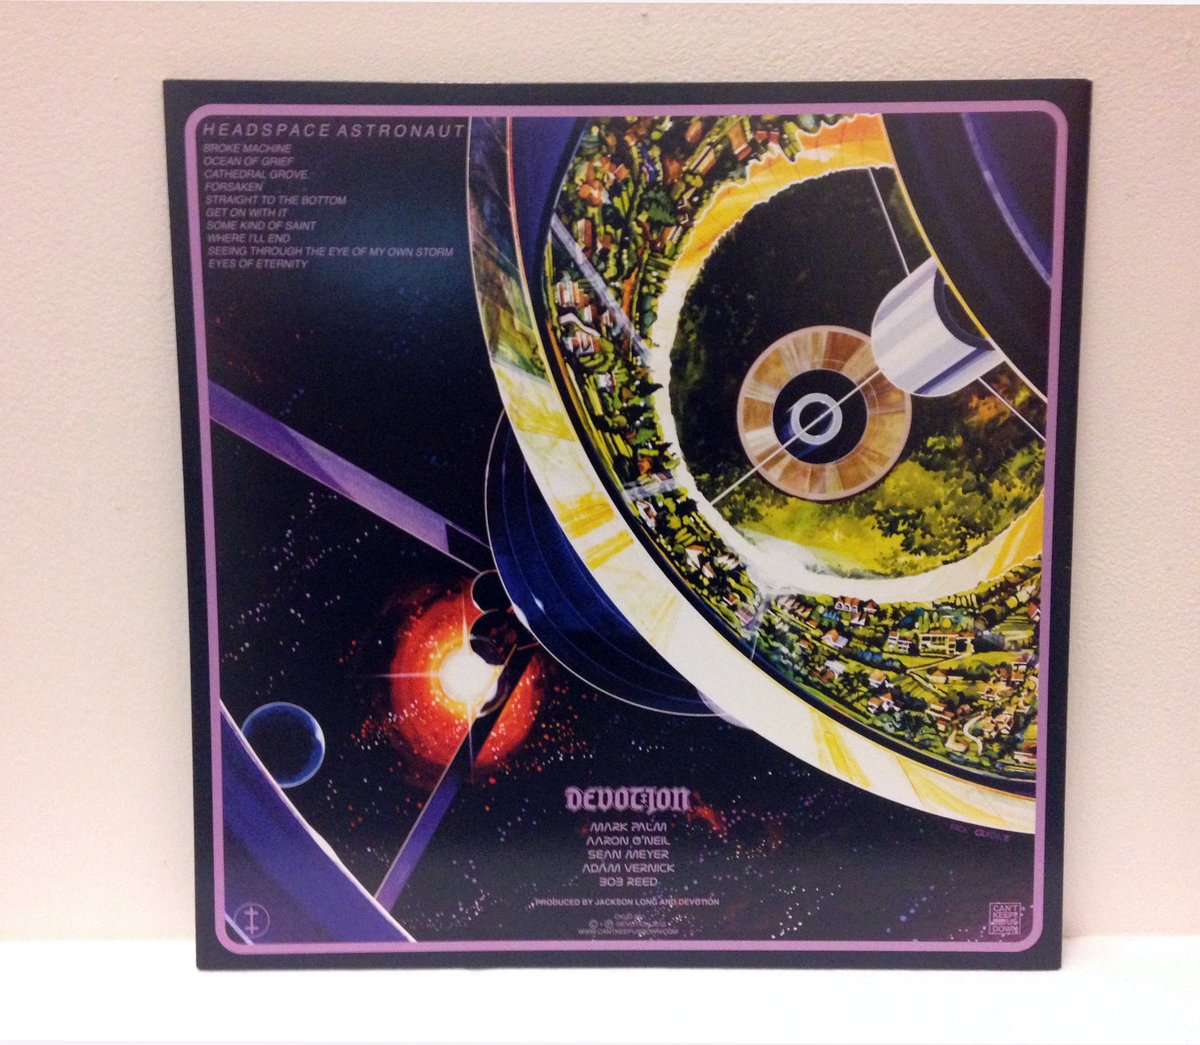 Image of DEVOTION - Headspace Astronaut 12" vinyl